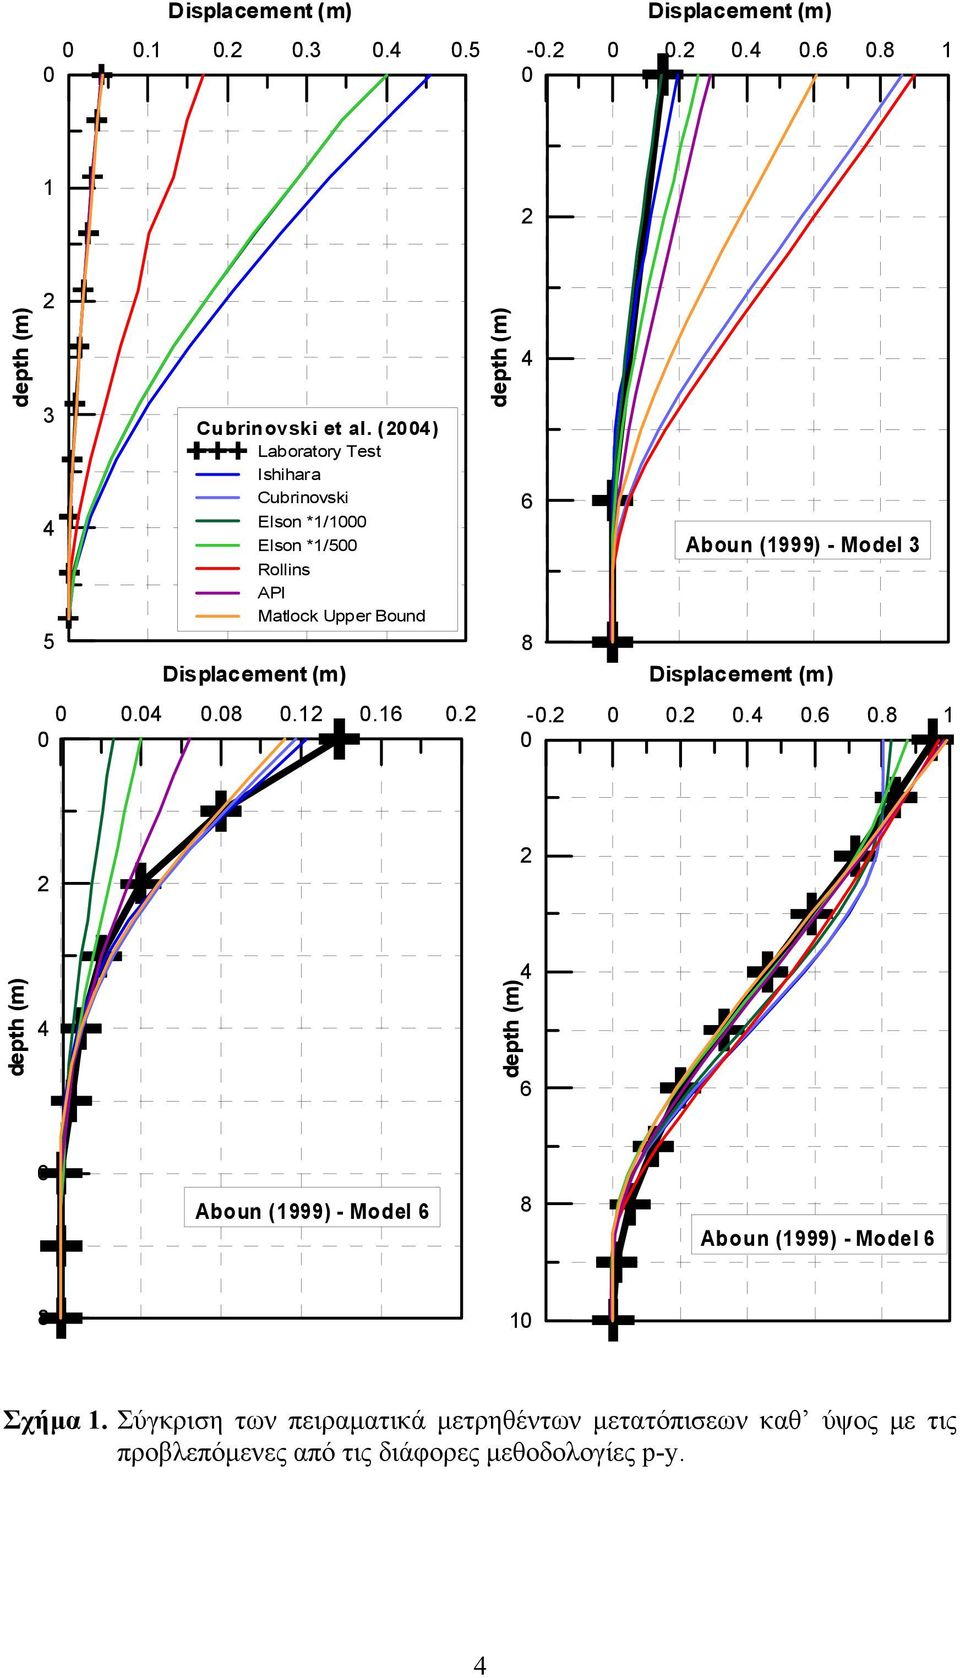 depth (m) 6 8 Aboun (1999) - Model 3 Displacement (m) -....6.8 1 depth (m) depth (m) 6 6 Aboun (1999) - Model 6 8 Aboun (1999) - Model 6 8 1 Σχήµα 1.